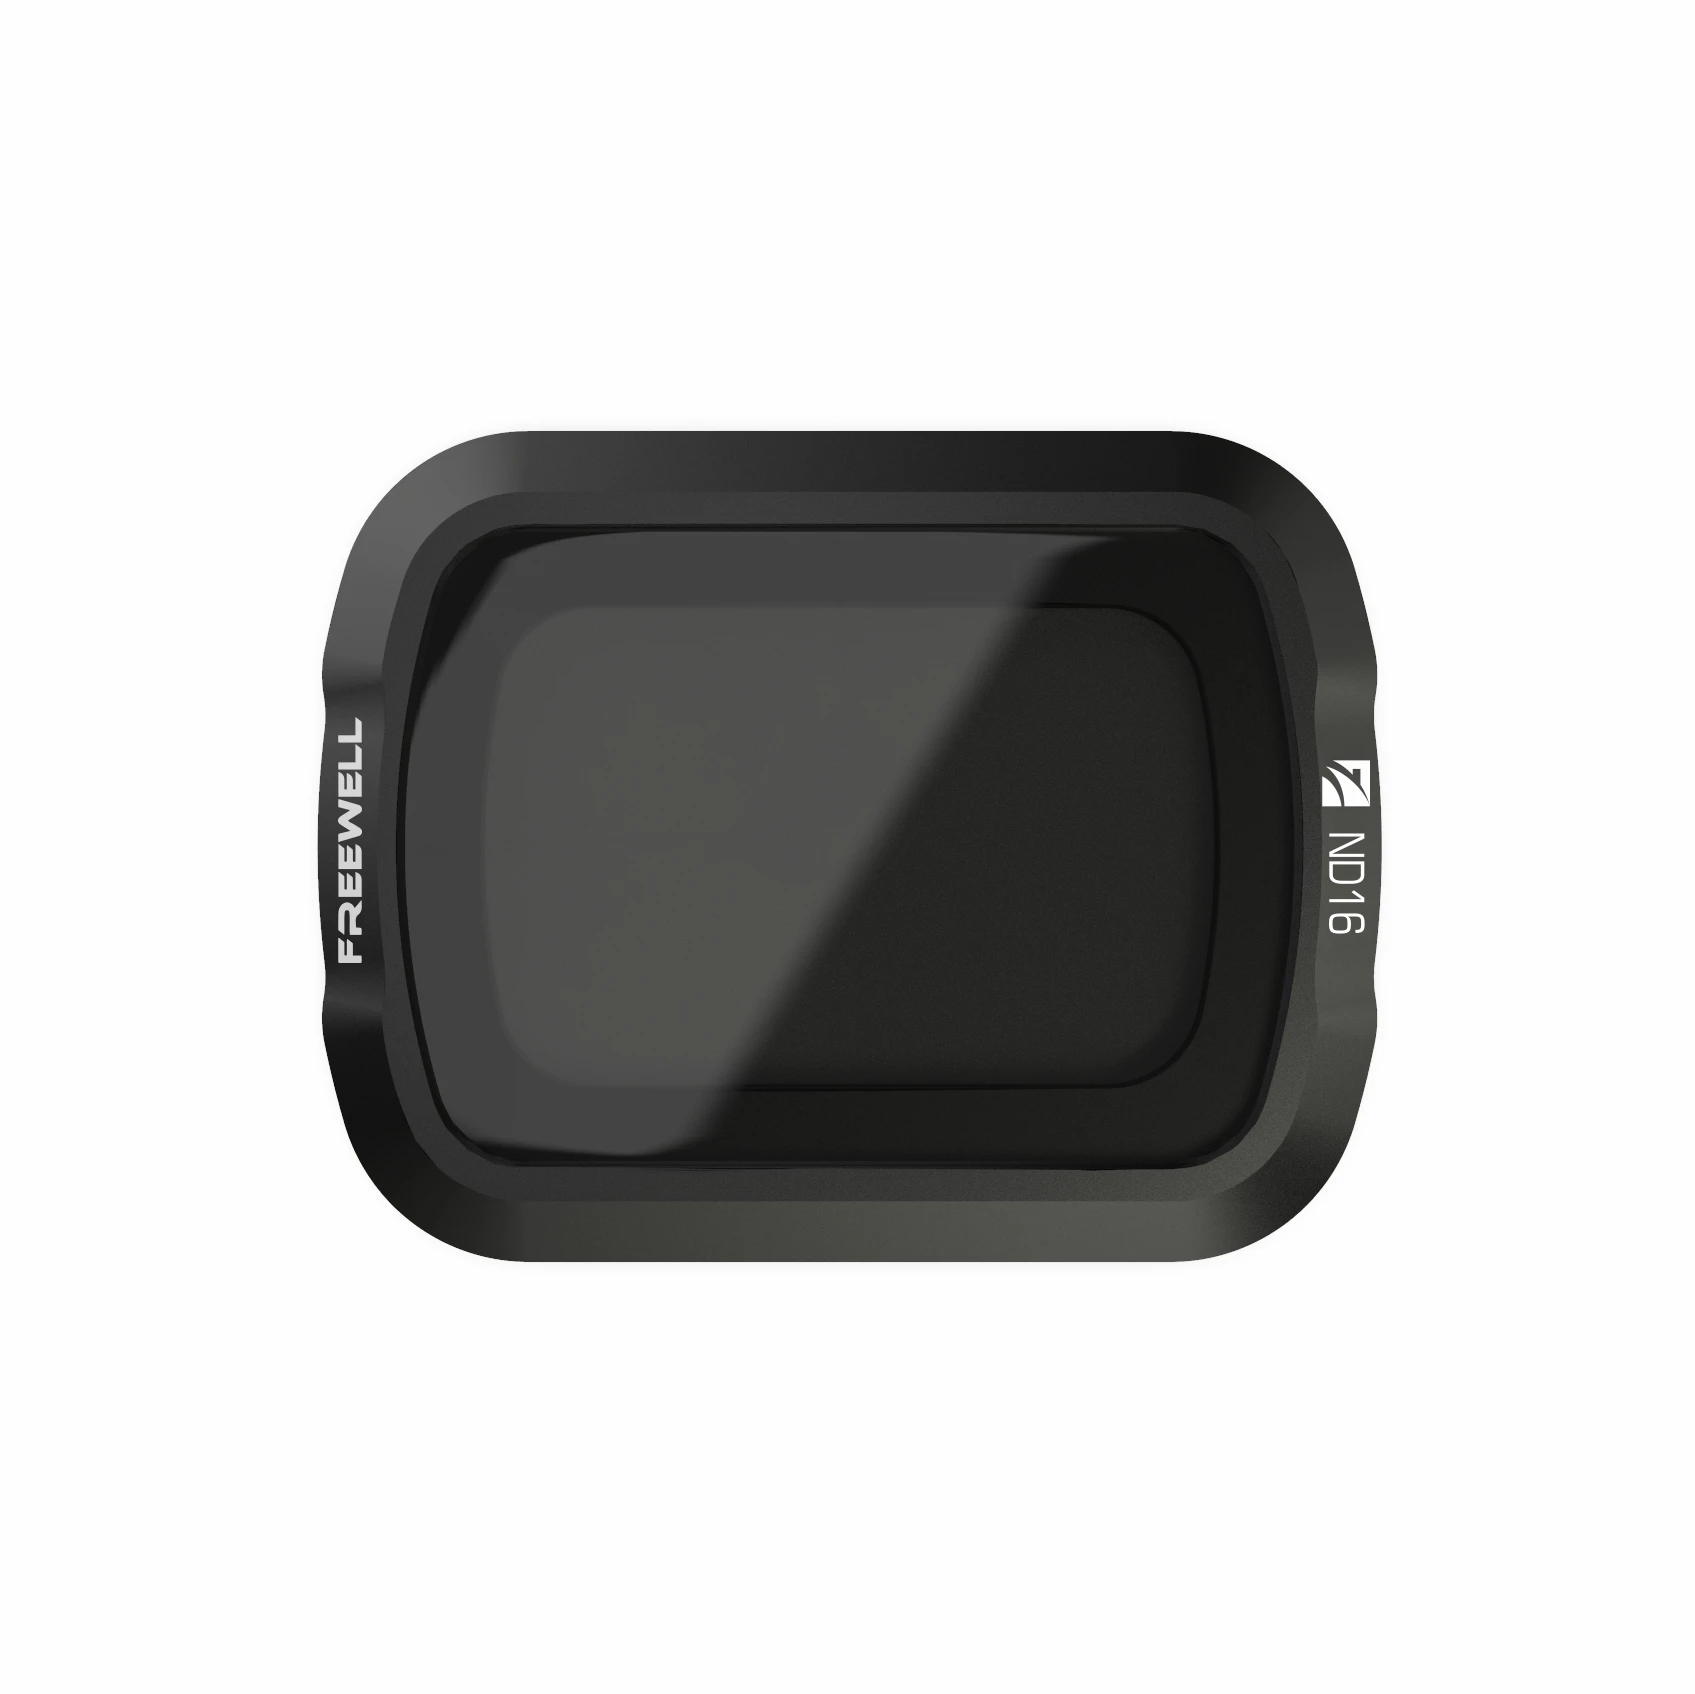 Freewell standard Day-4 K Series-4 Pack ND4, ND8, ND16, PL фильтры для объективов камер, совместимые с DJI Osmo Pocket